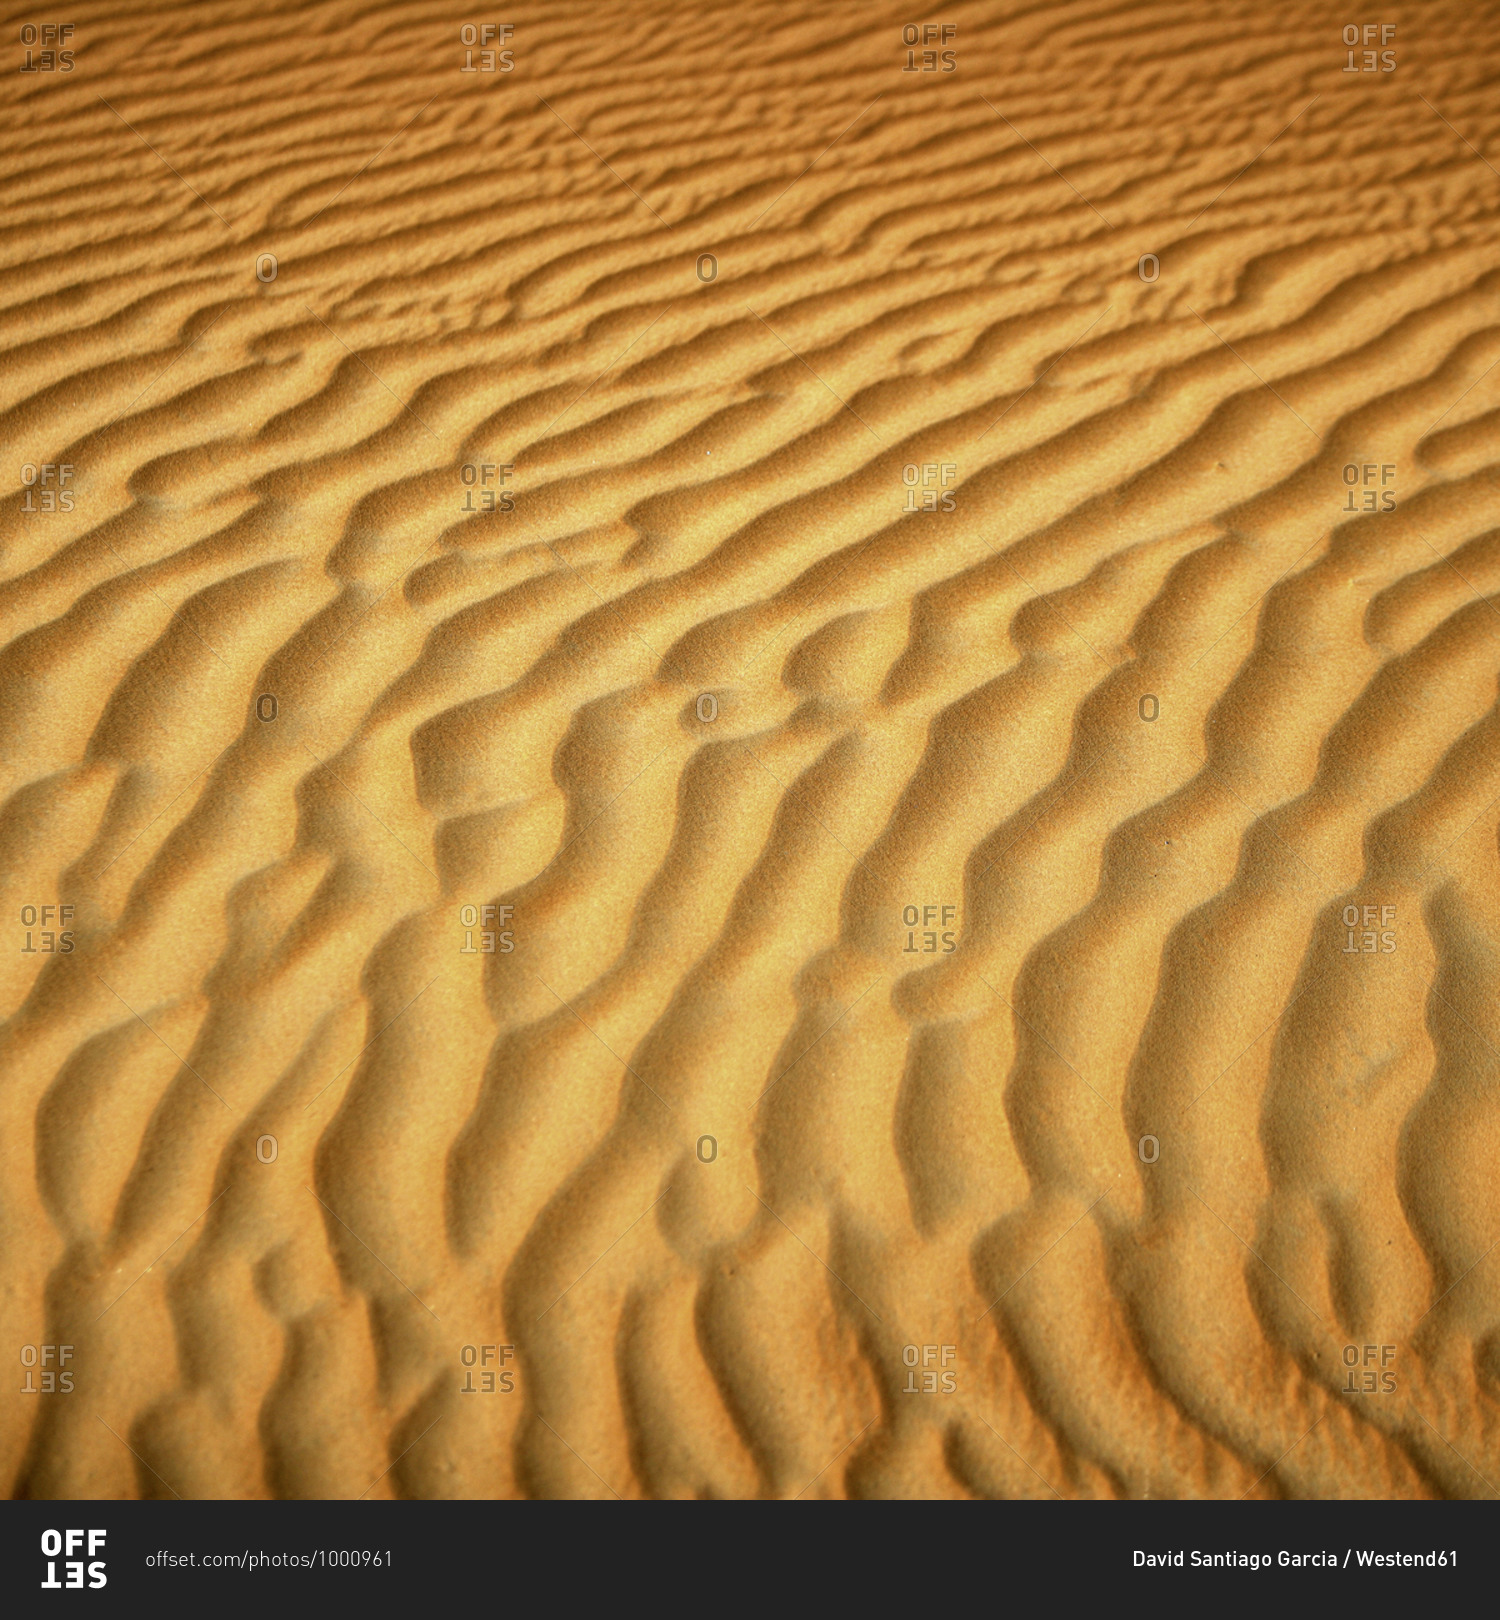 United Arab Emirates- Emirate of Abu Dhabi- Rippled sand at Quarter desert